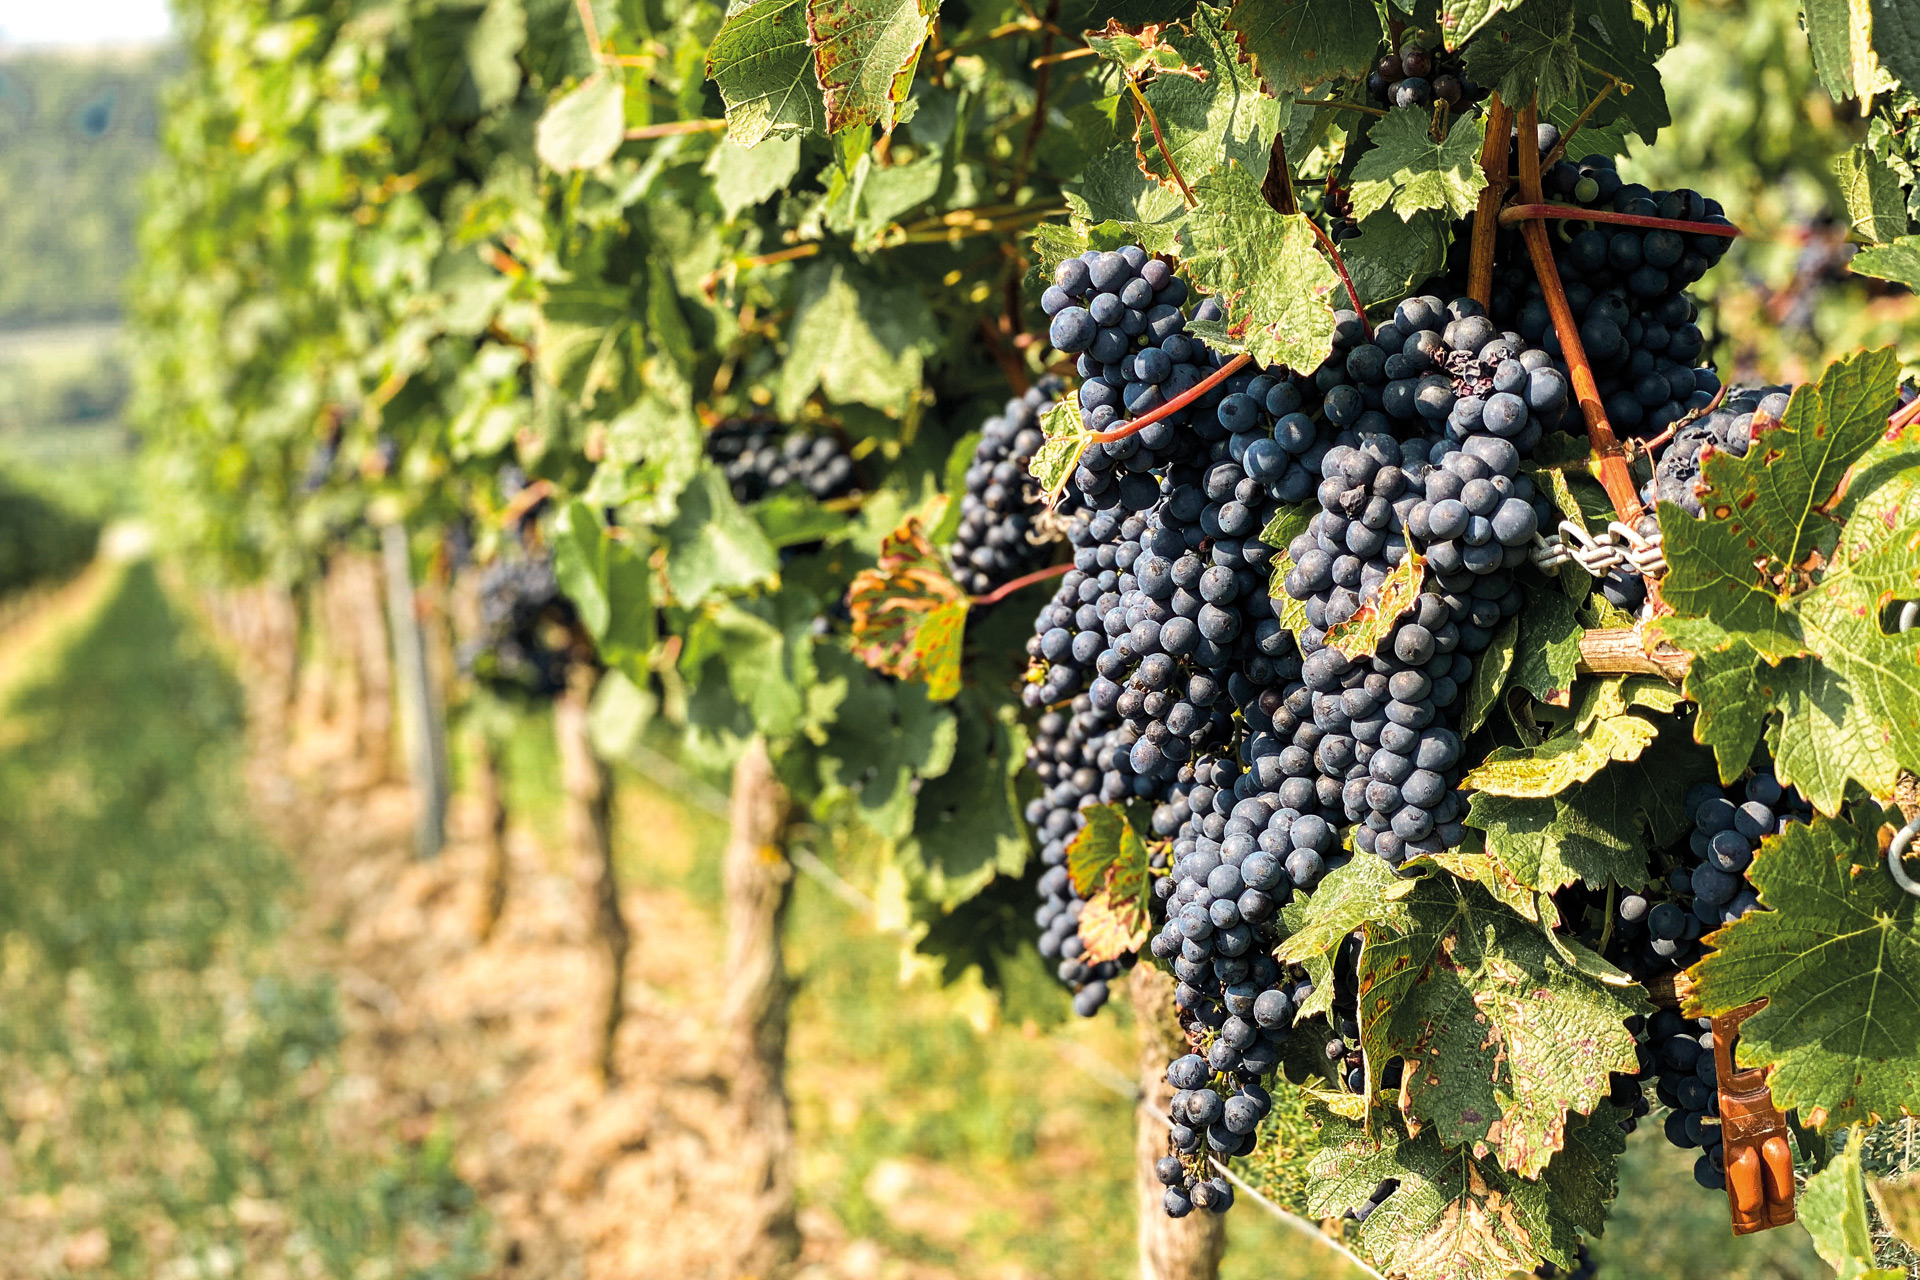 Vineyard with black grapes on vine